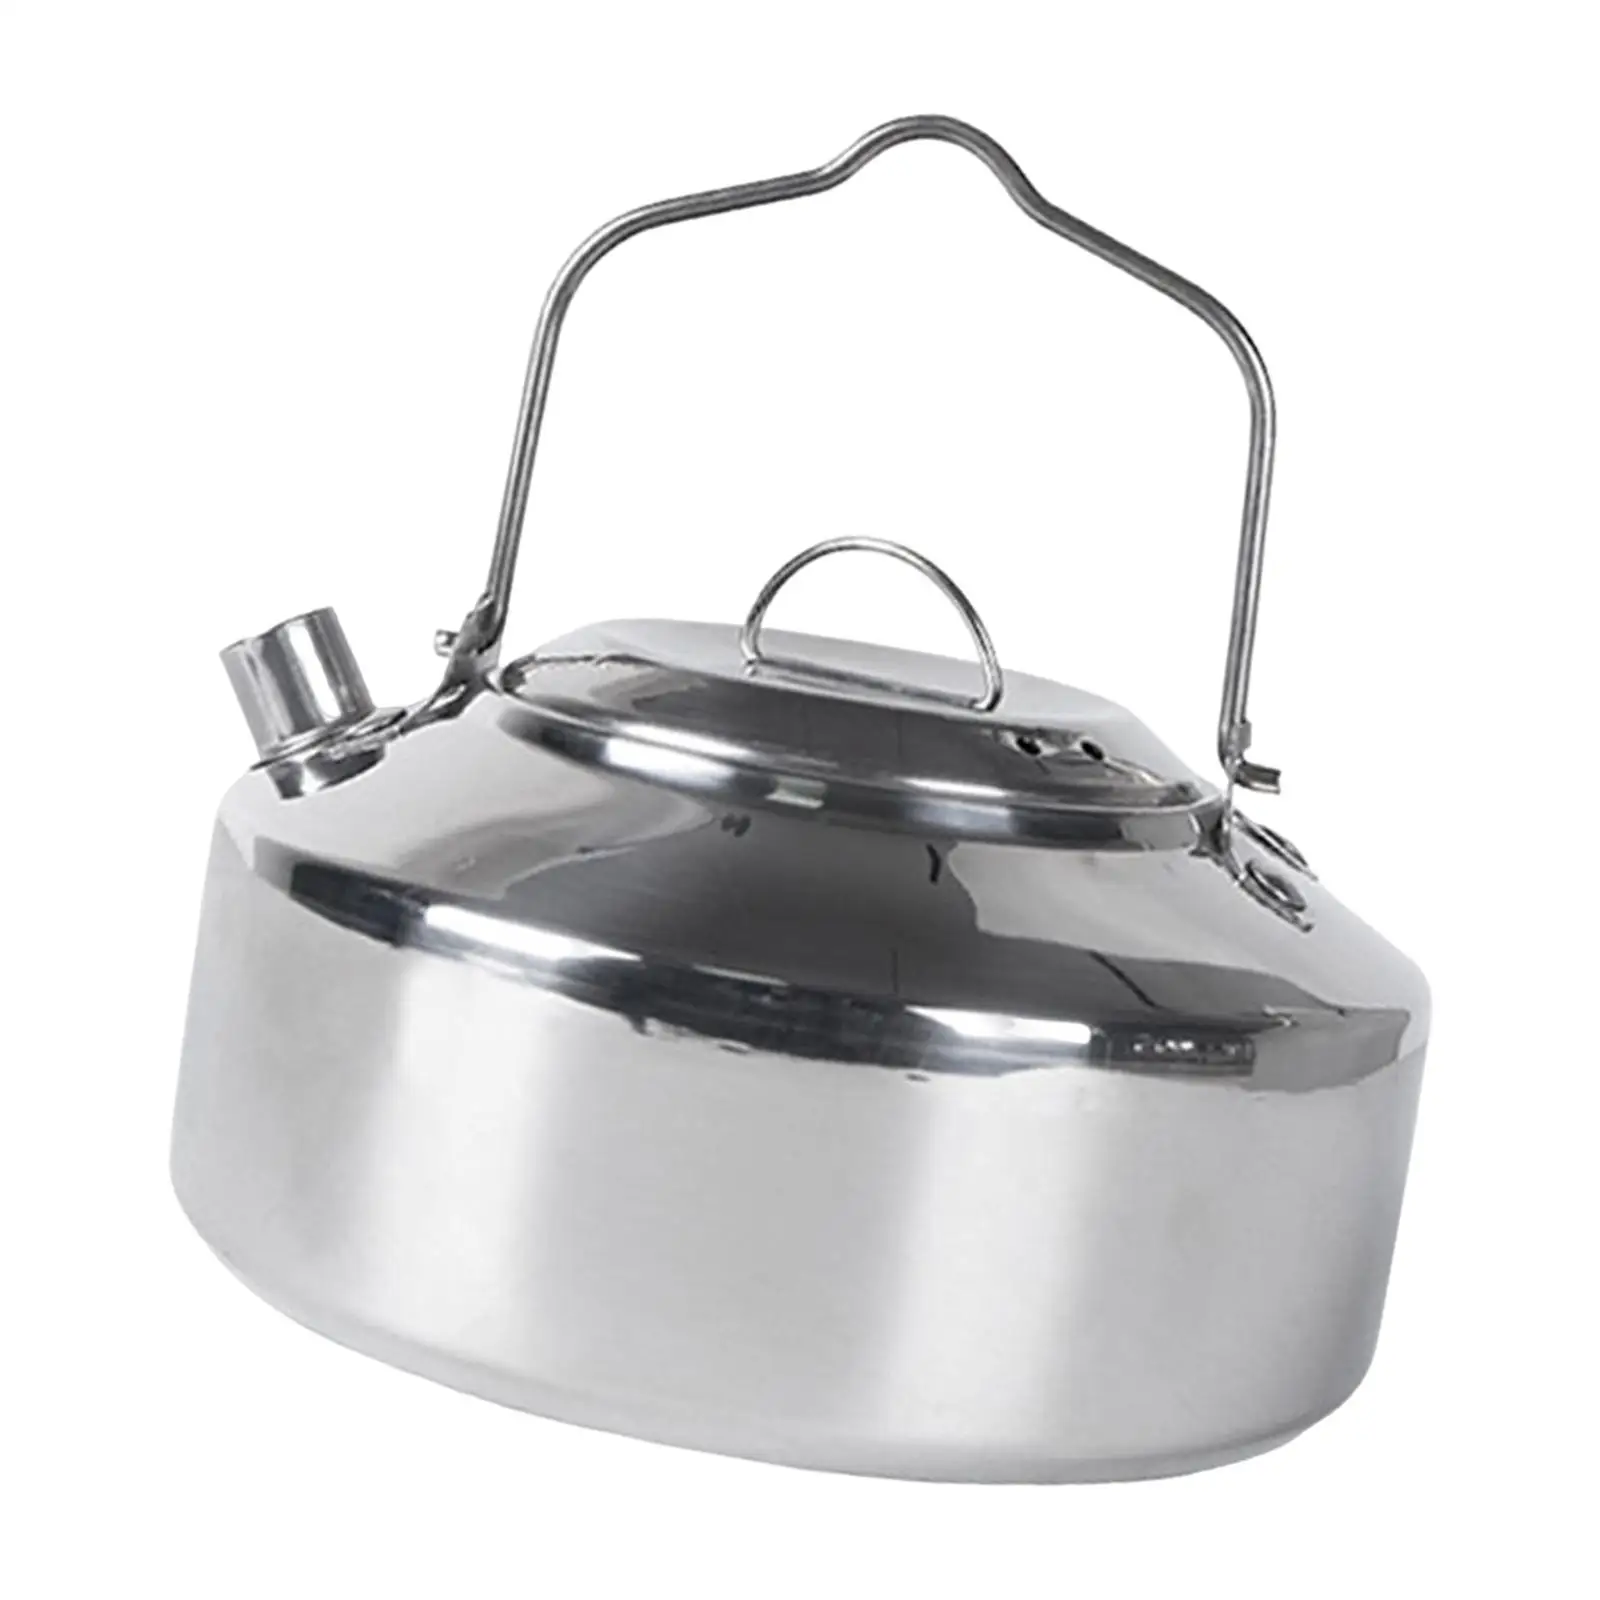 Water Boiler Teapot Compact Kitchenware Teakettle Tea Kettle Portable Camping